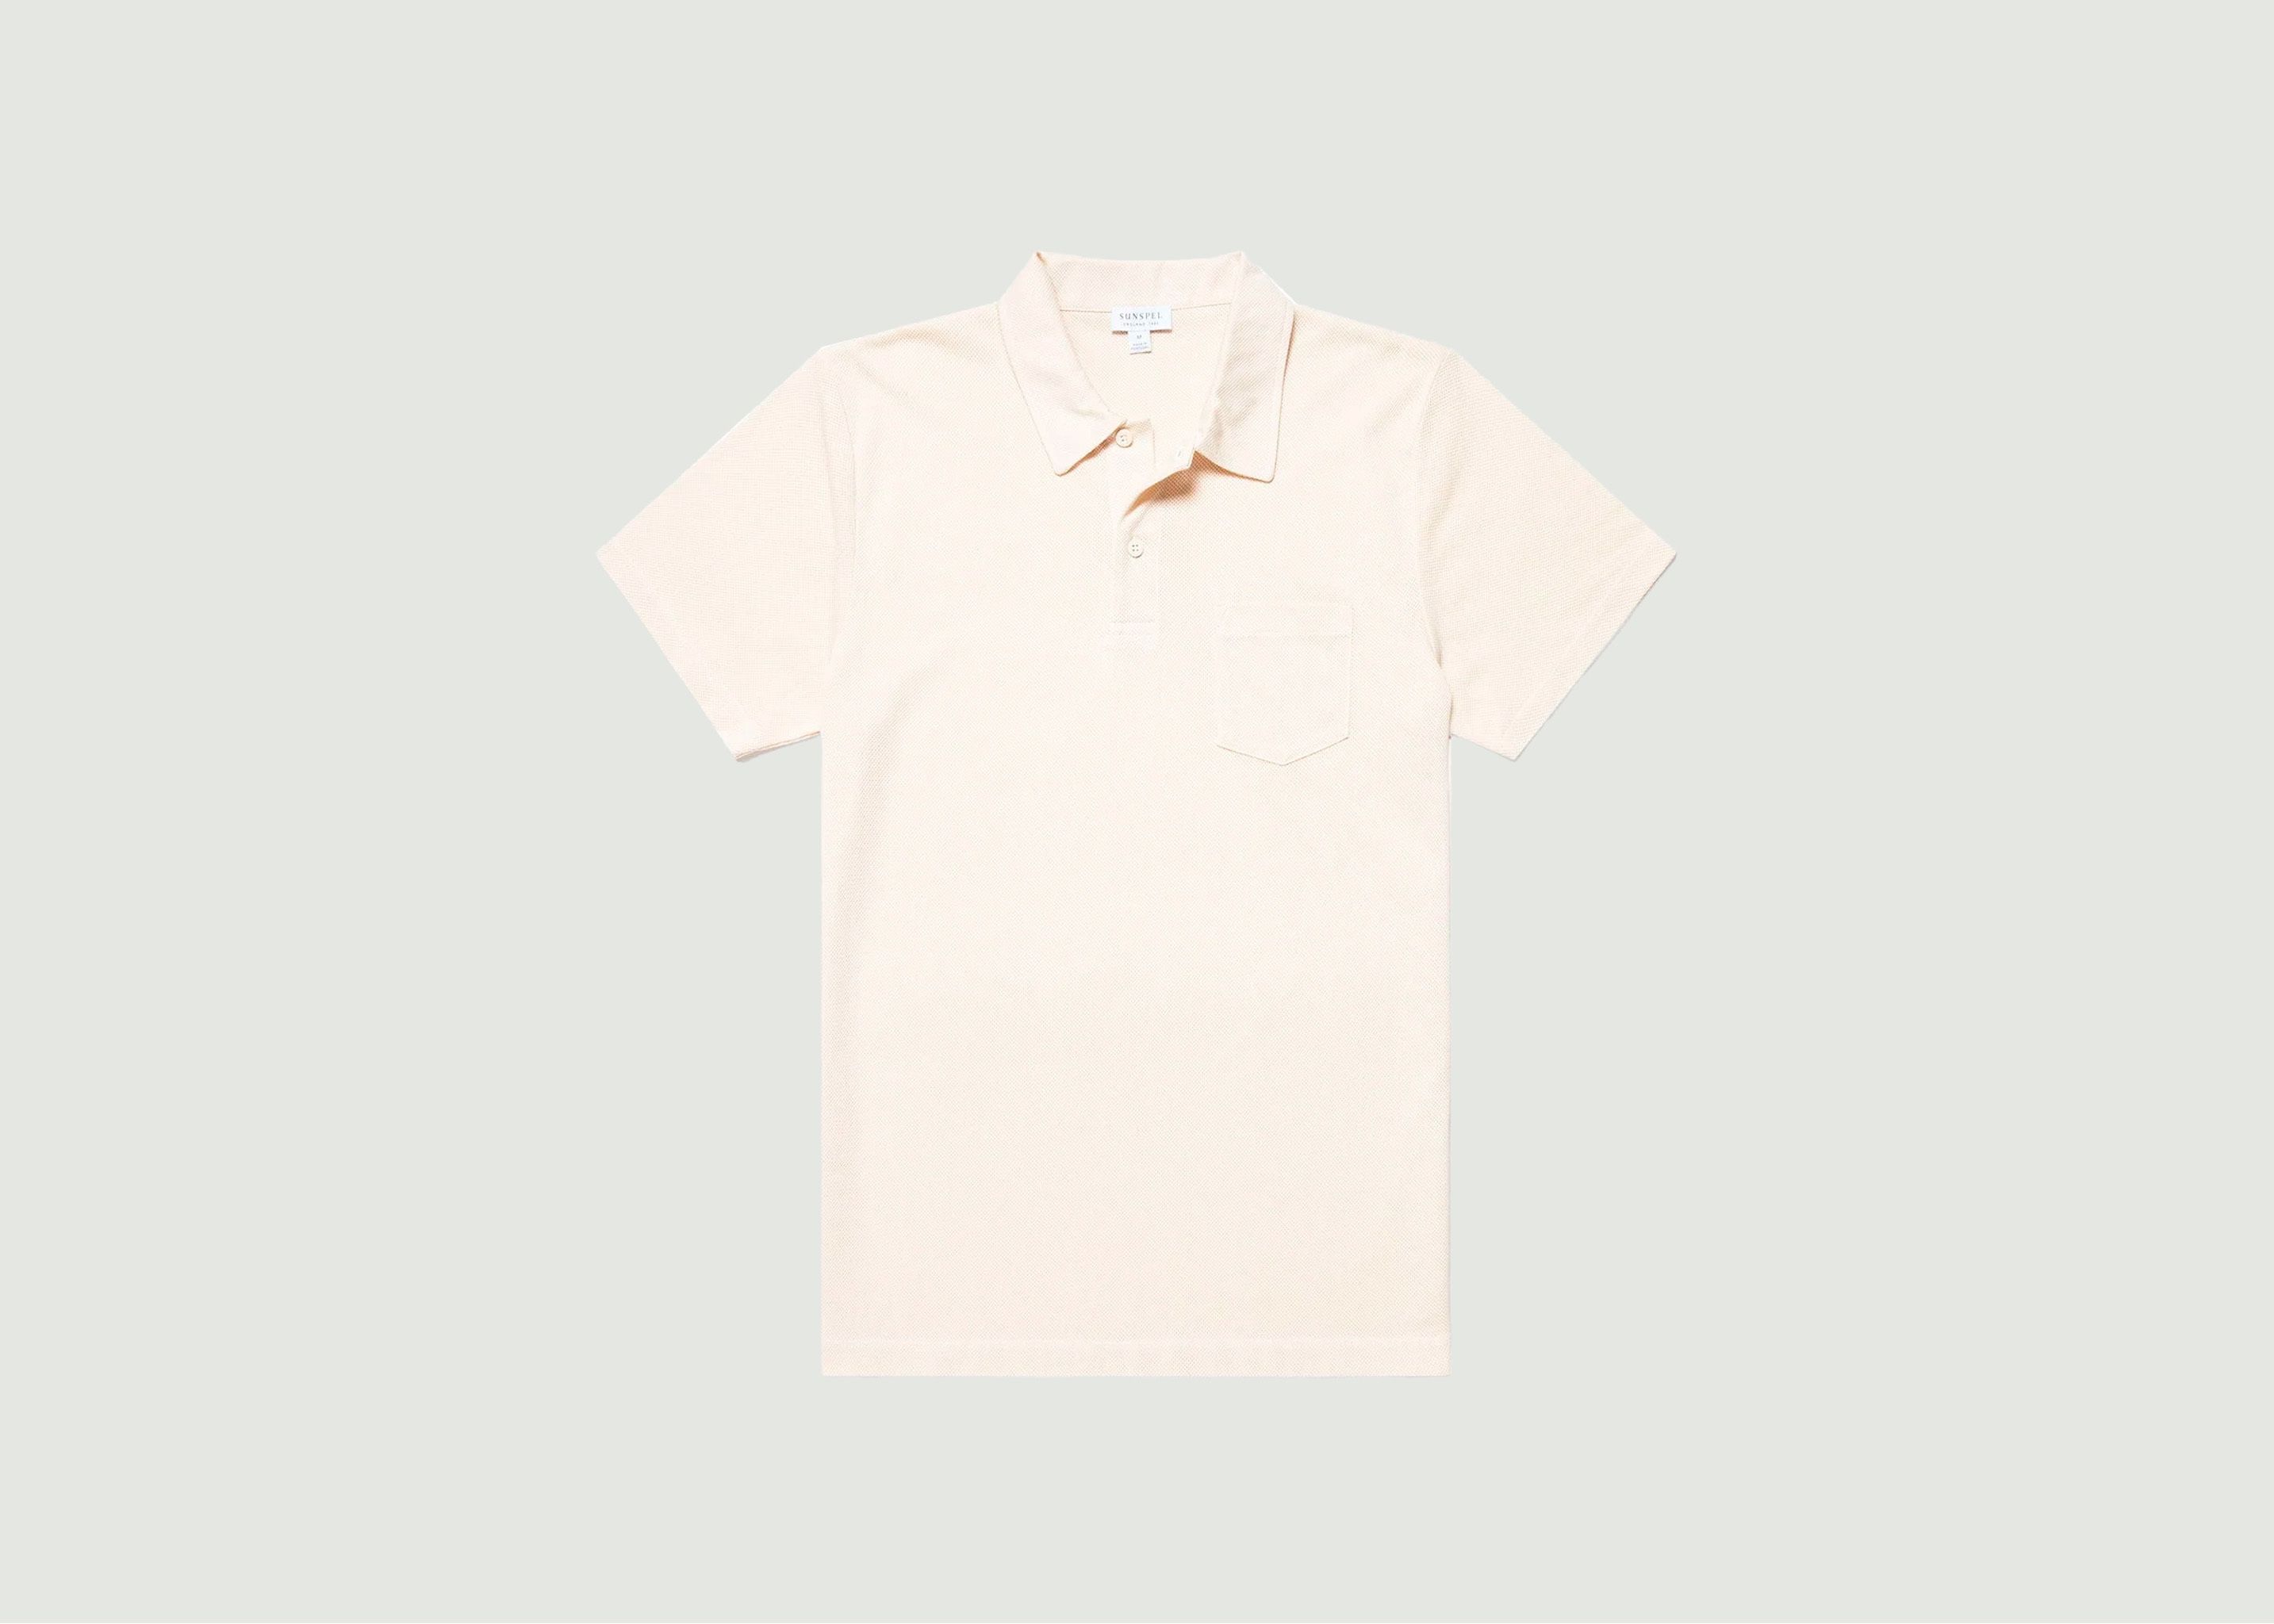 Linear Mesh polo shirt - Sunspel